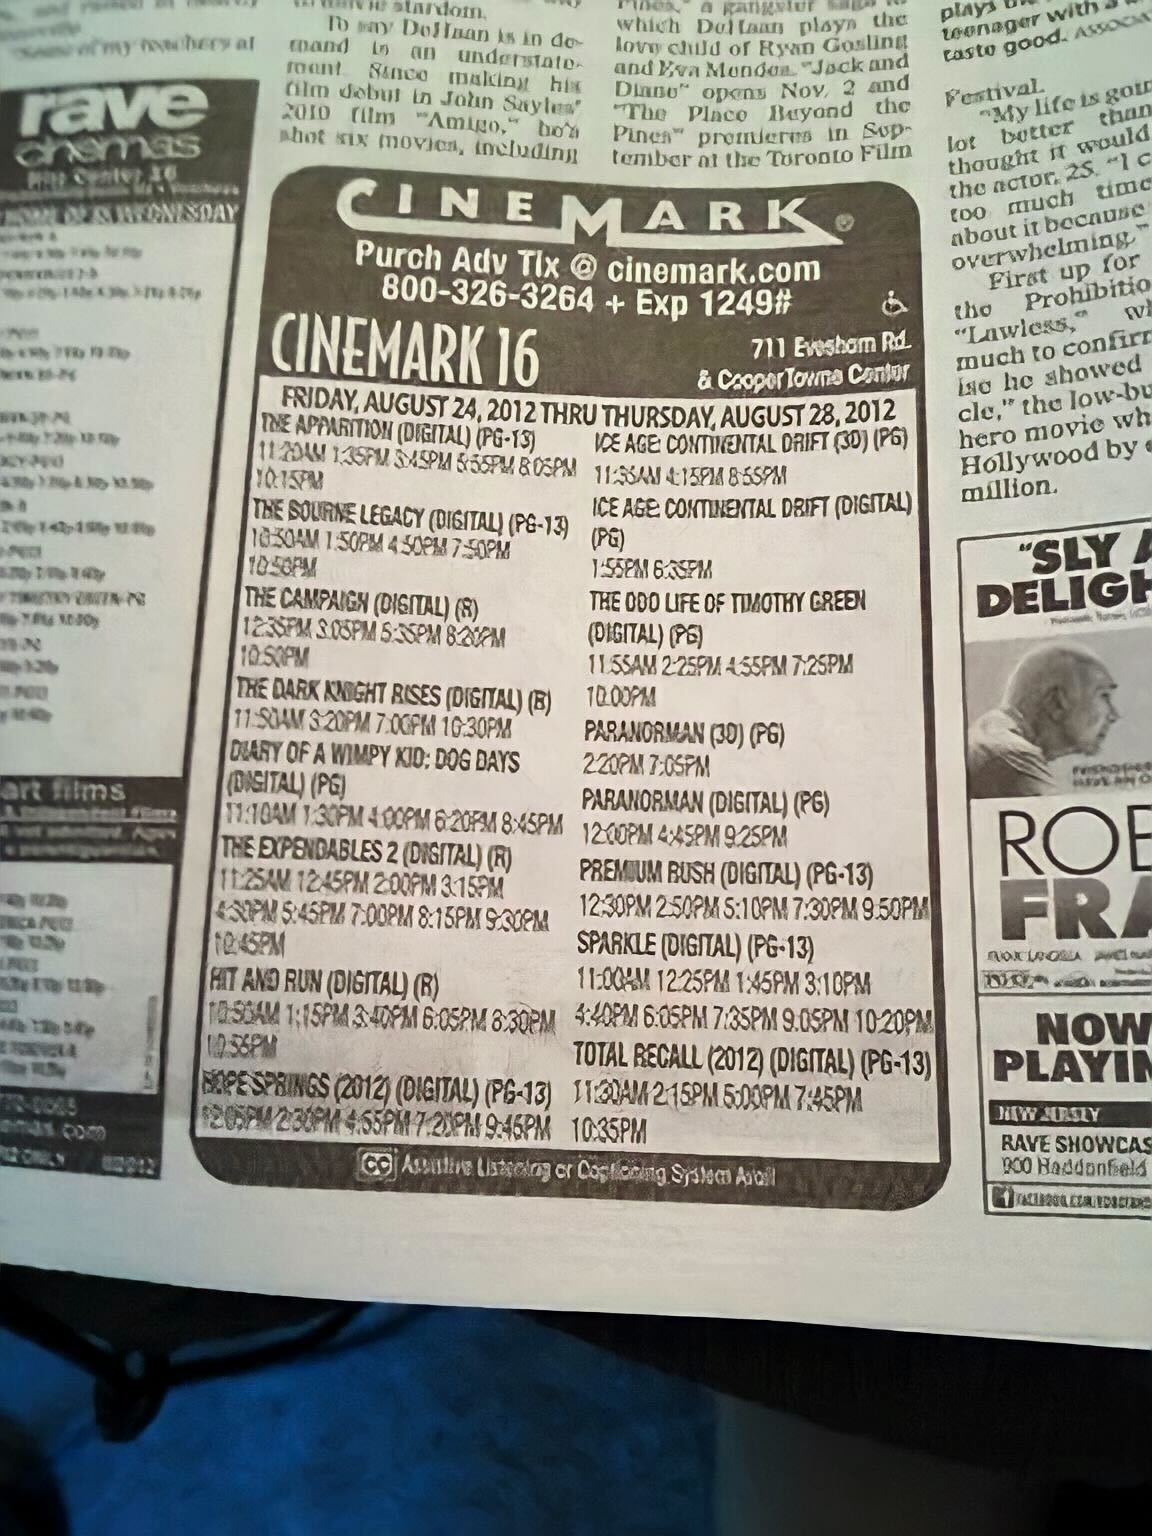 Movie times in a newspaper